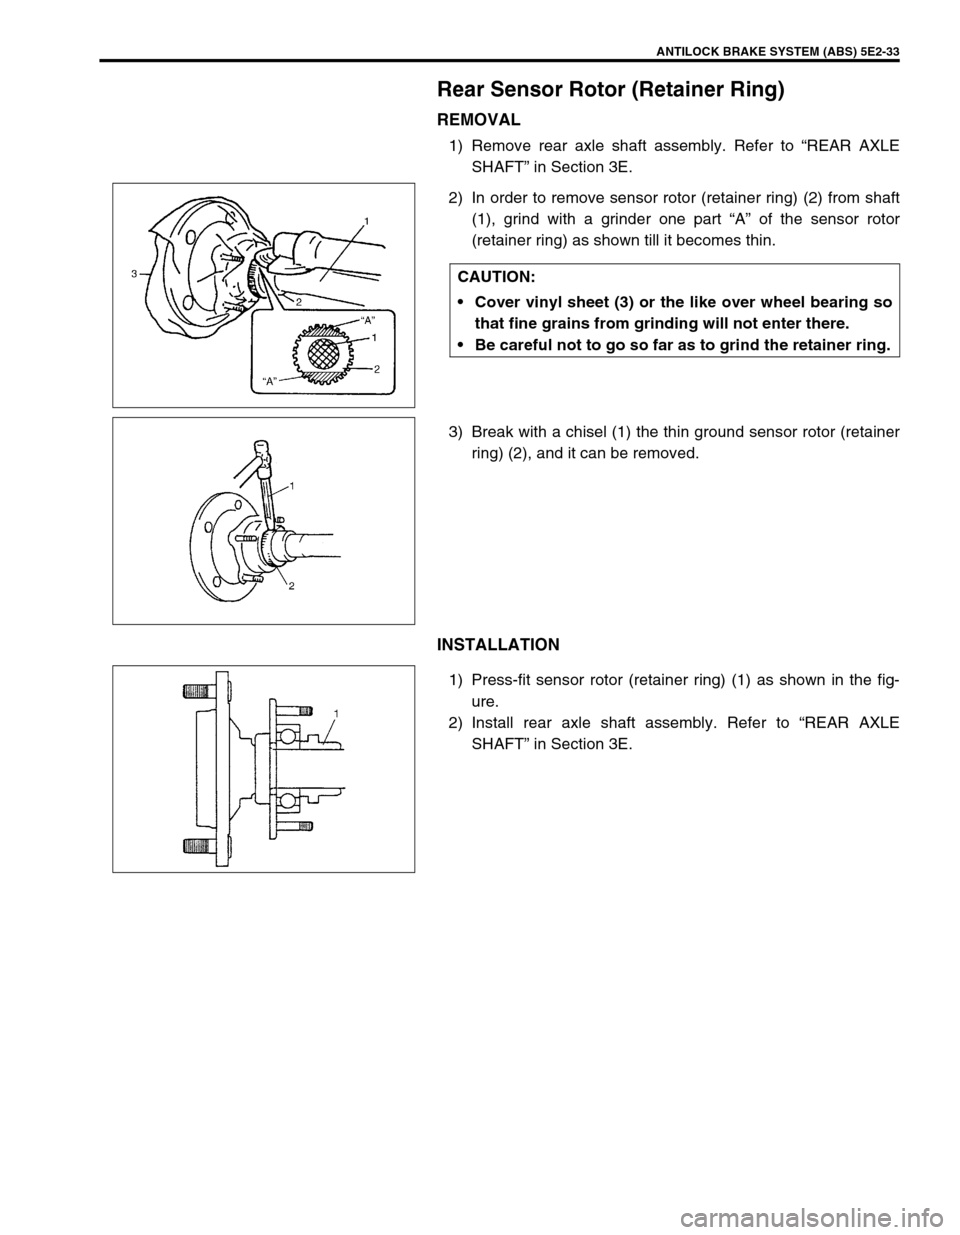 SUZUKI GRAND VITARA 2001 2.G Service Manual ANTILOCK BRAKE SYSTEM (ABS) 5E2-33
Rear Sensor Rotor (Retainer Ring)
REMOVAL
1) Remove rear axle shaft assembly. Refer to “REAR AXLE
SHAFT” in Section 3E.
2) In order to remove sensor rotor (retai